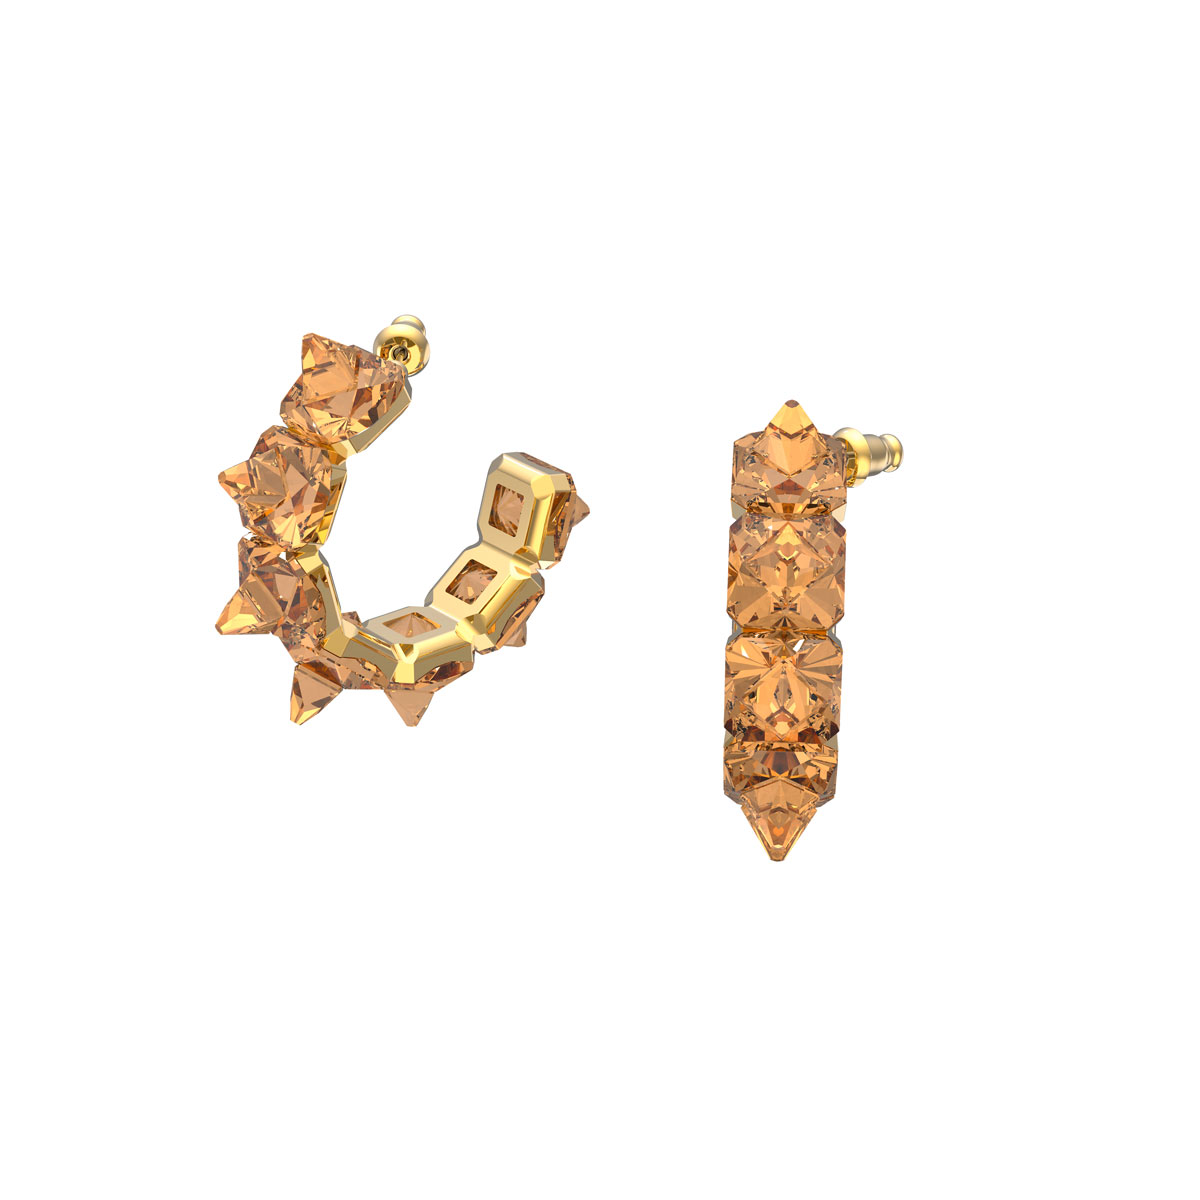 Swarovski Chroma Hoop Earrings, Pyramid Cut Crystals, Yellow, Gold-Tone Plated